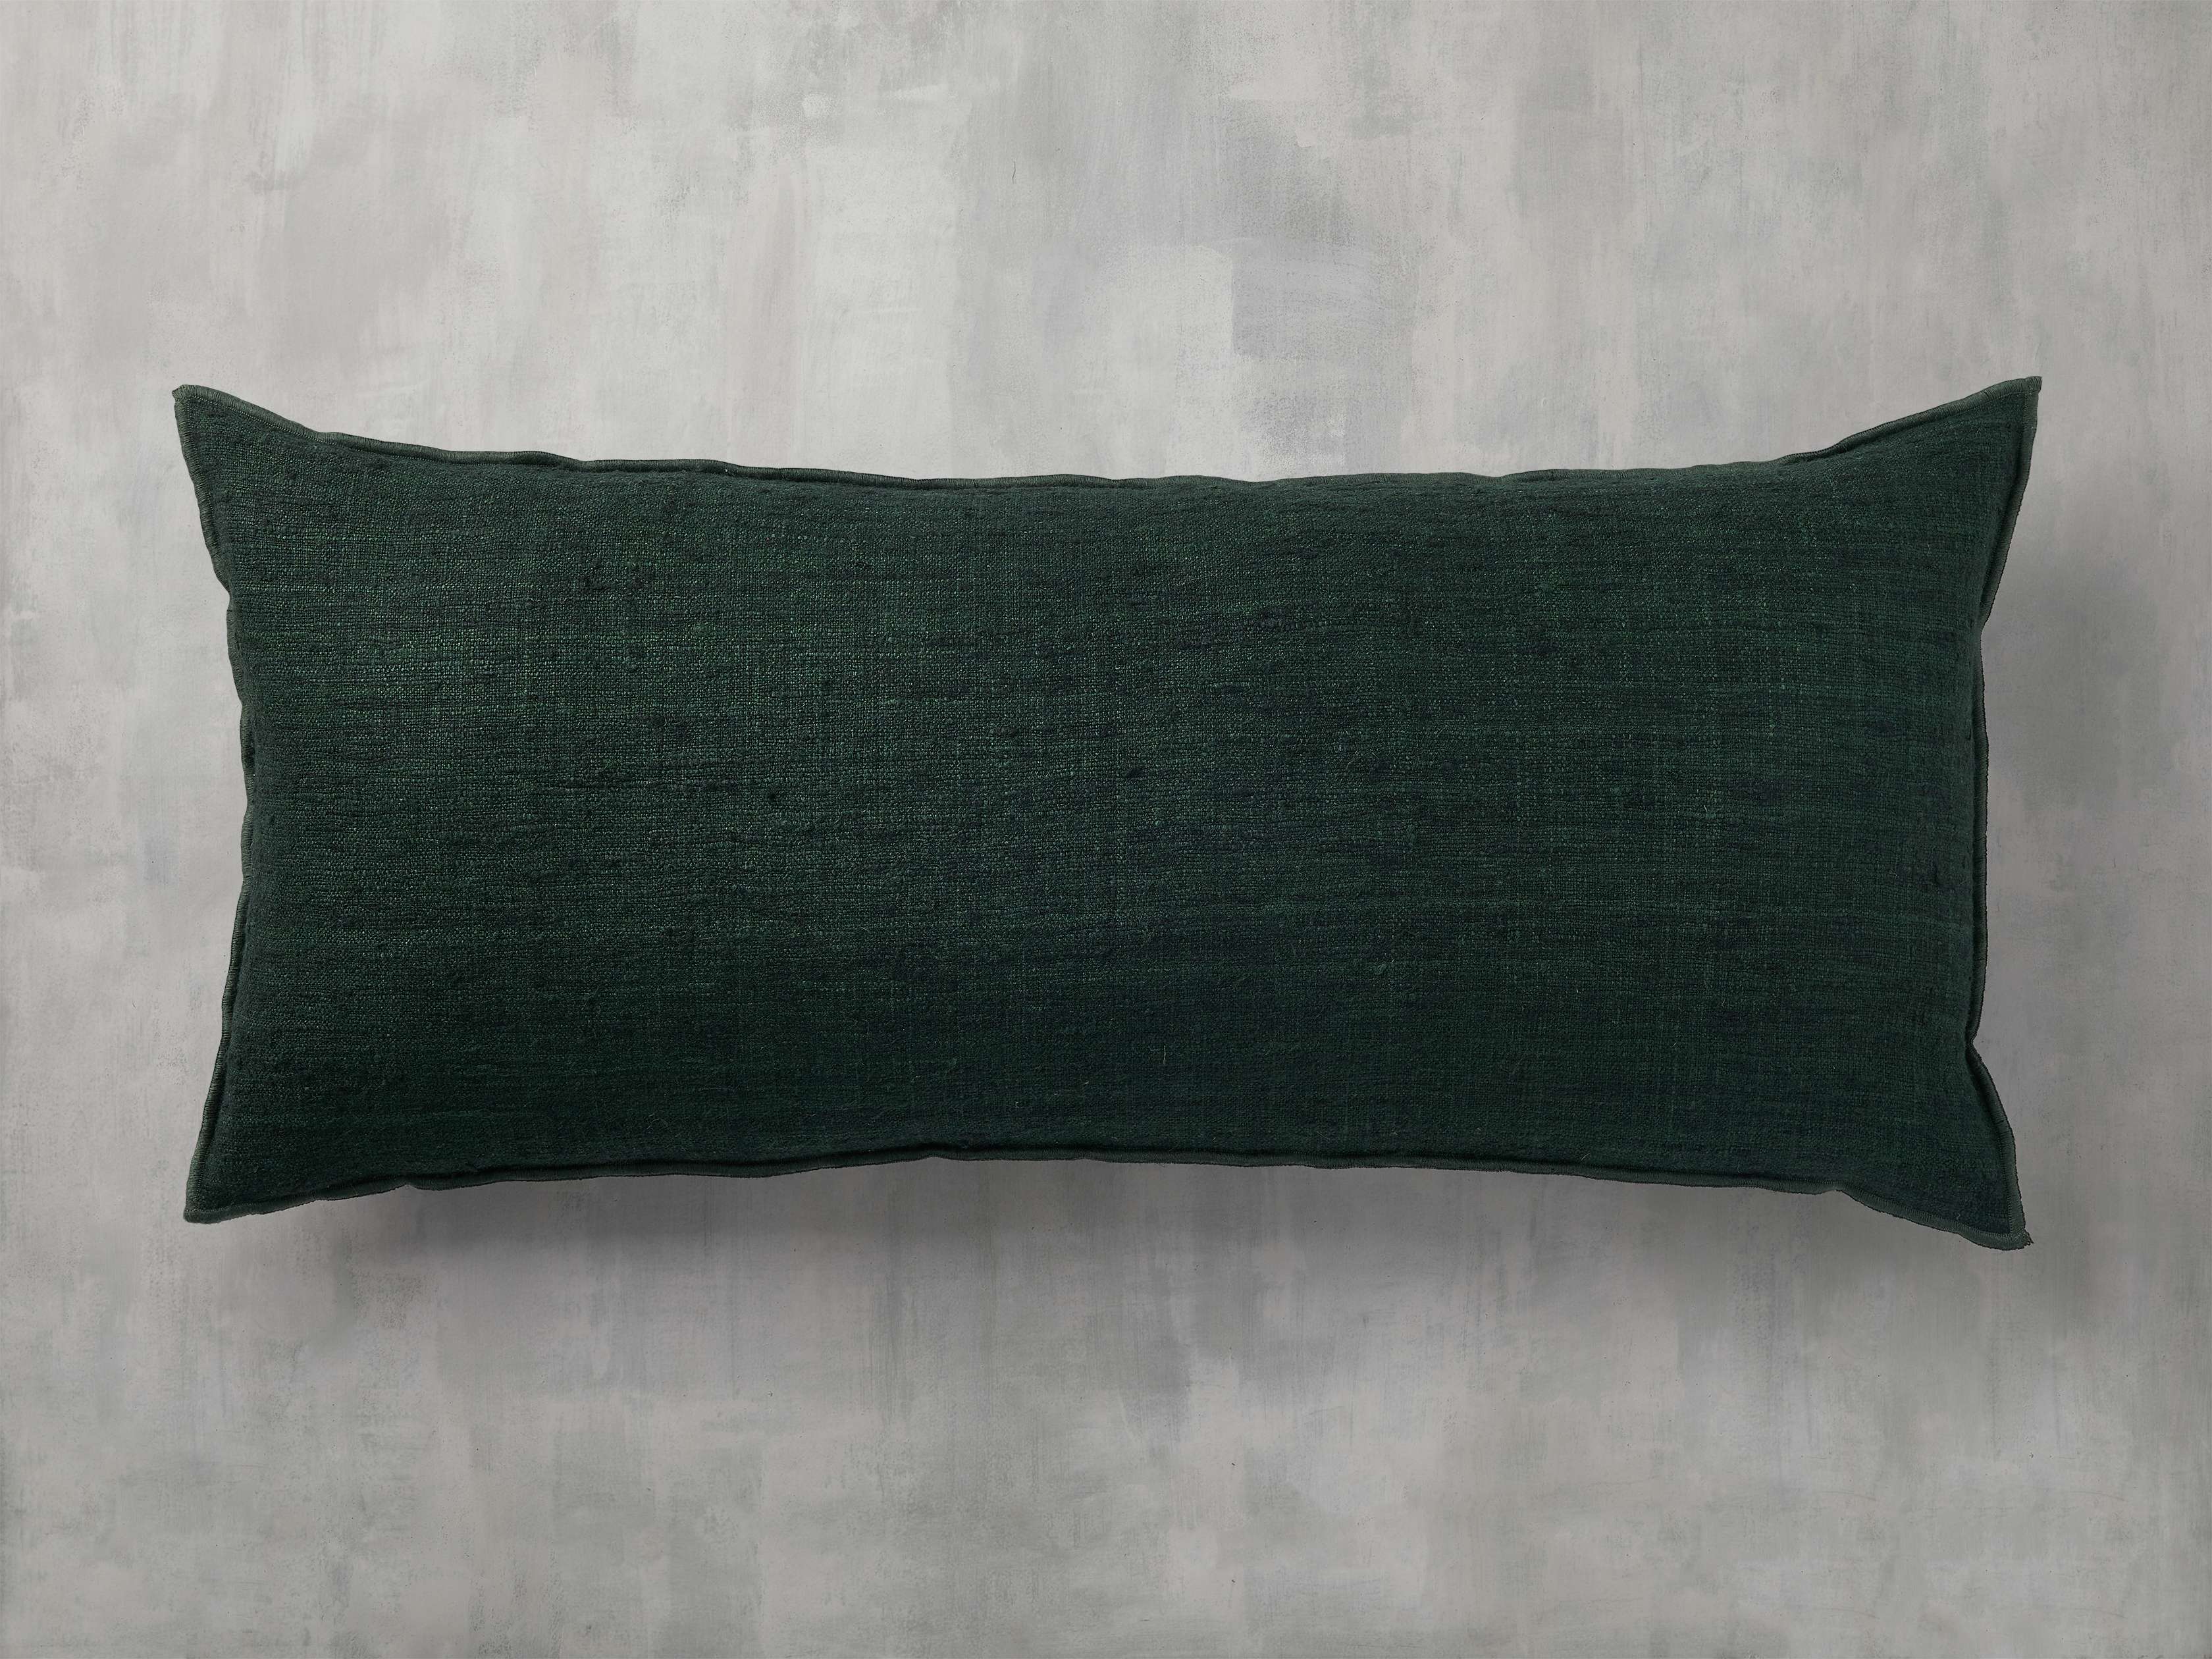 ReynosoHomeDecor 18x28 Pillow Insert Form